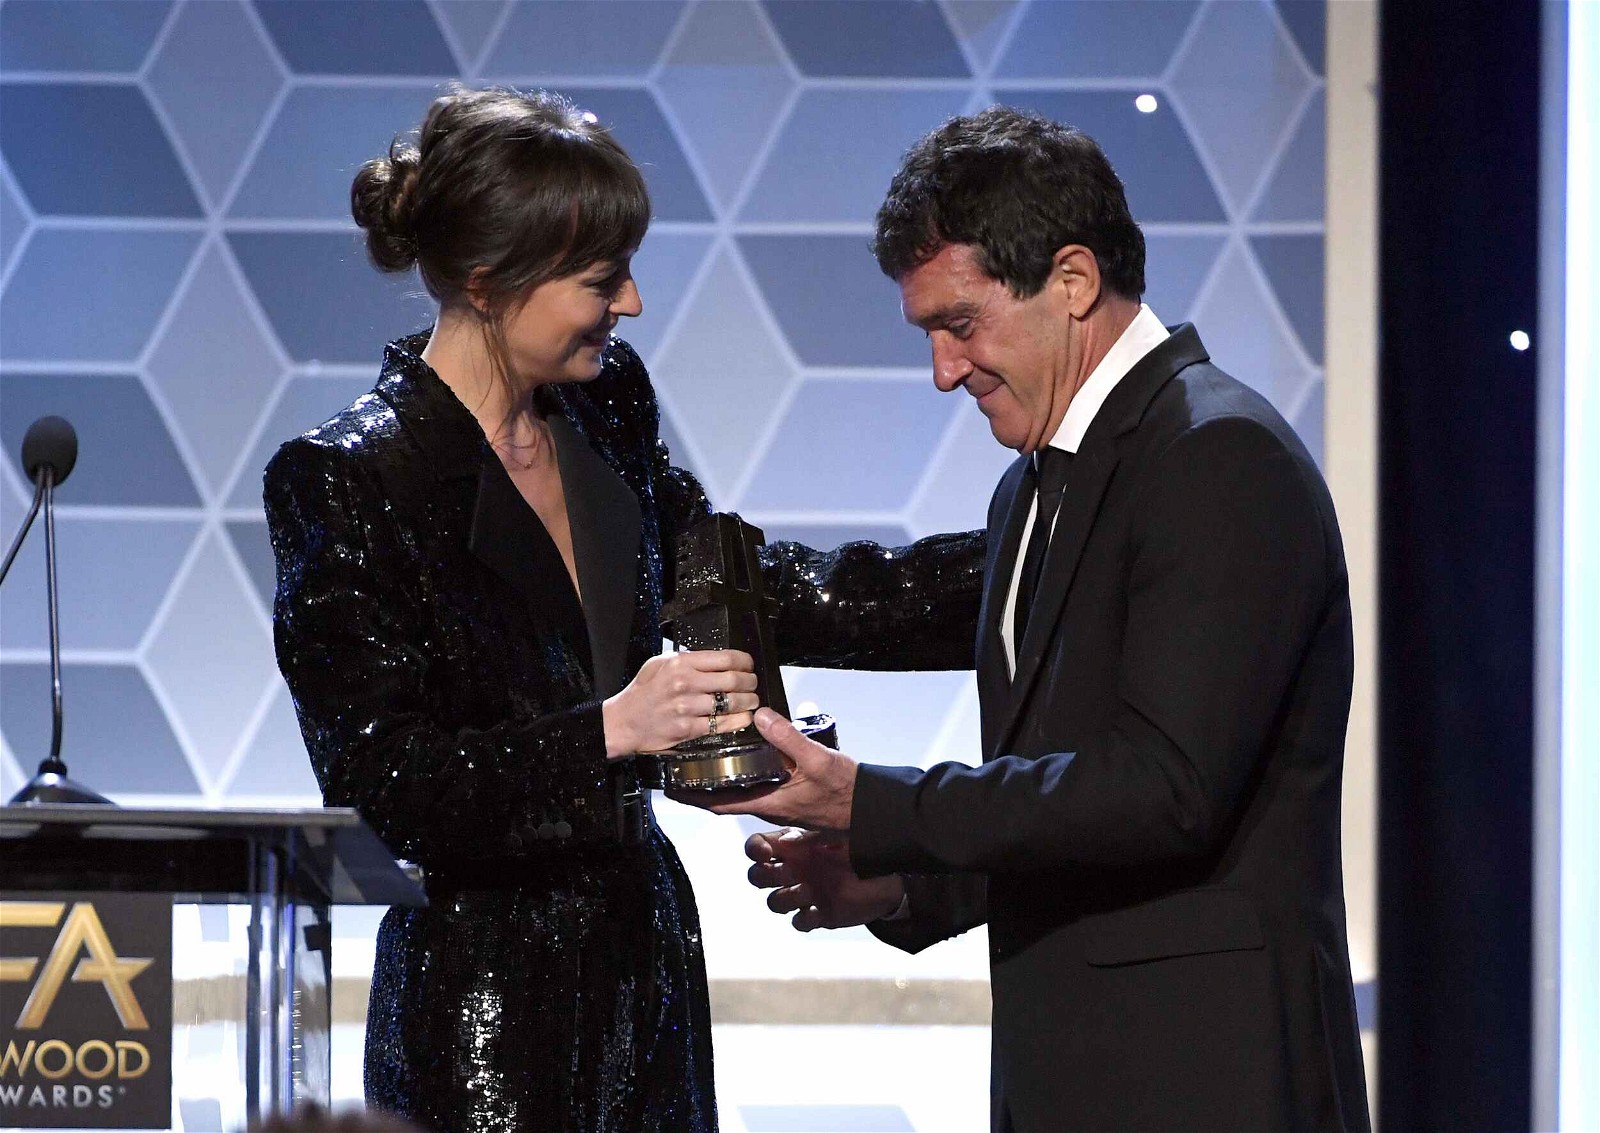 Dakota Johnson presenting the Hollywood Actor Award to Antonio Banderas